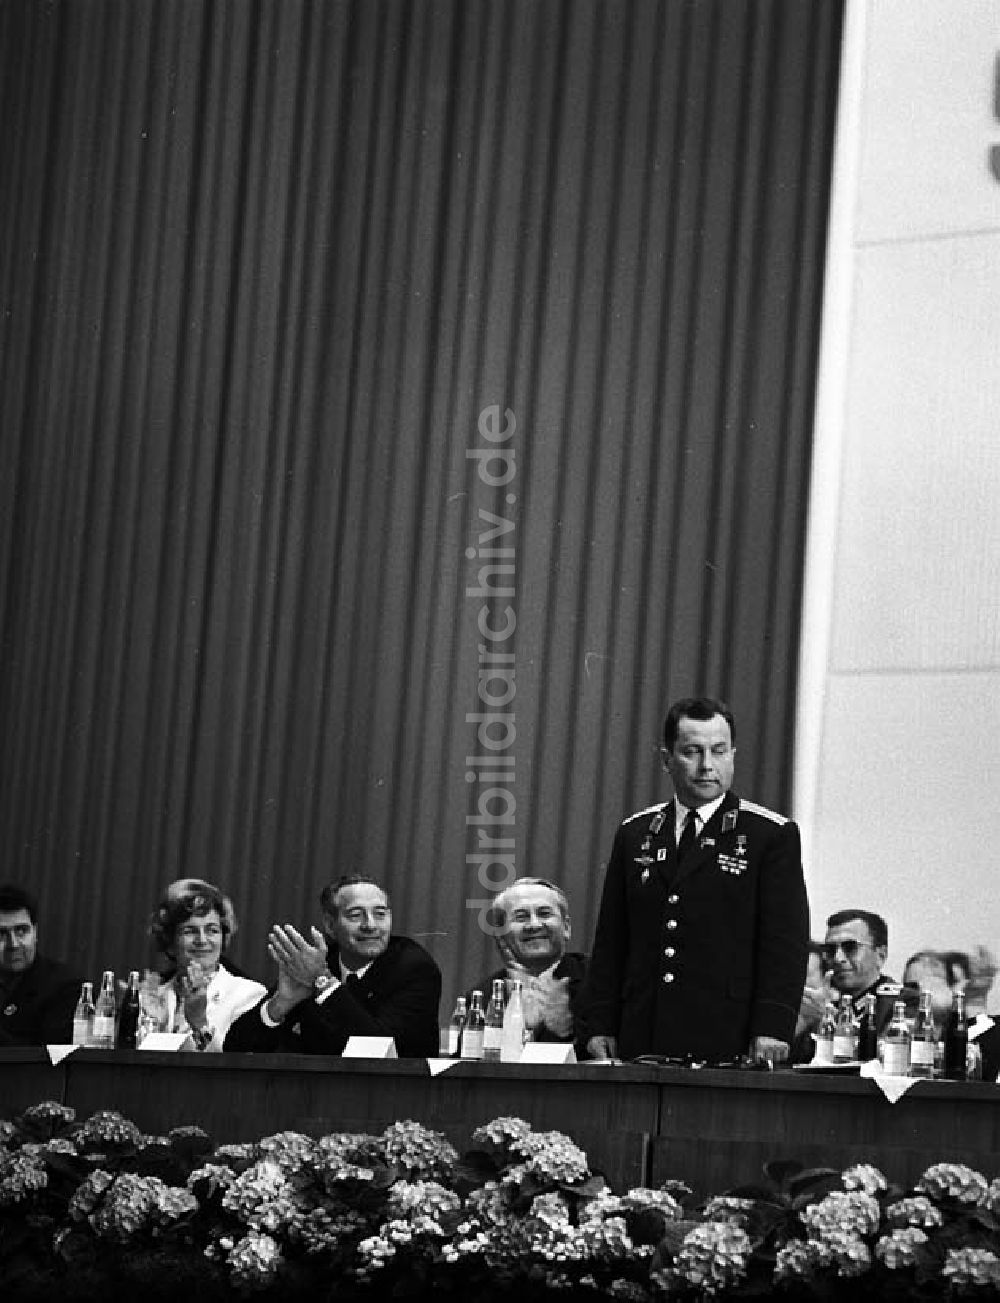 DDR-Bildarchiv: Berlin - Kongress der DSF 1.Tag